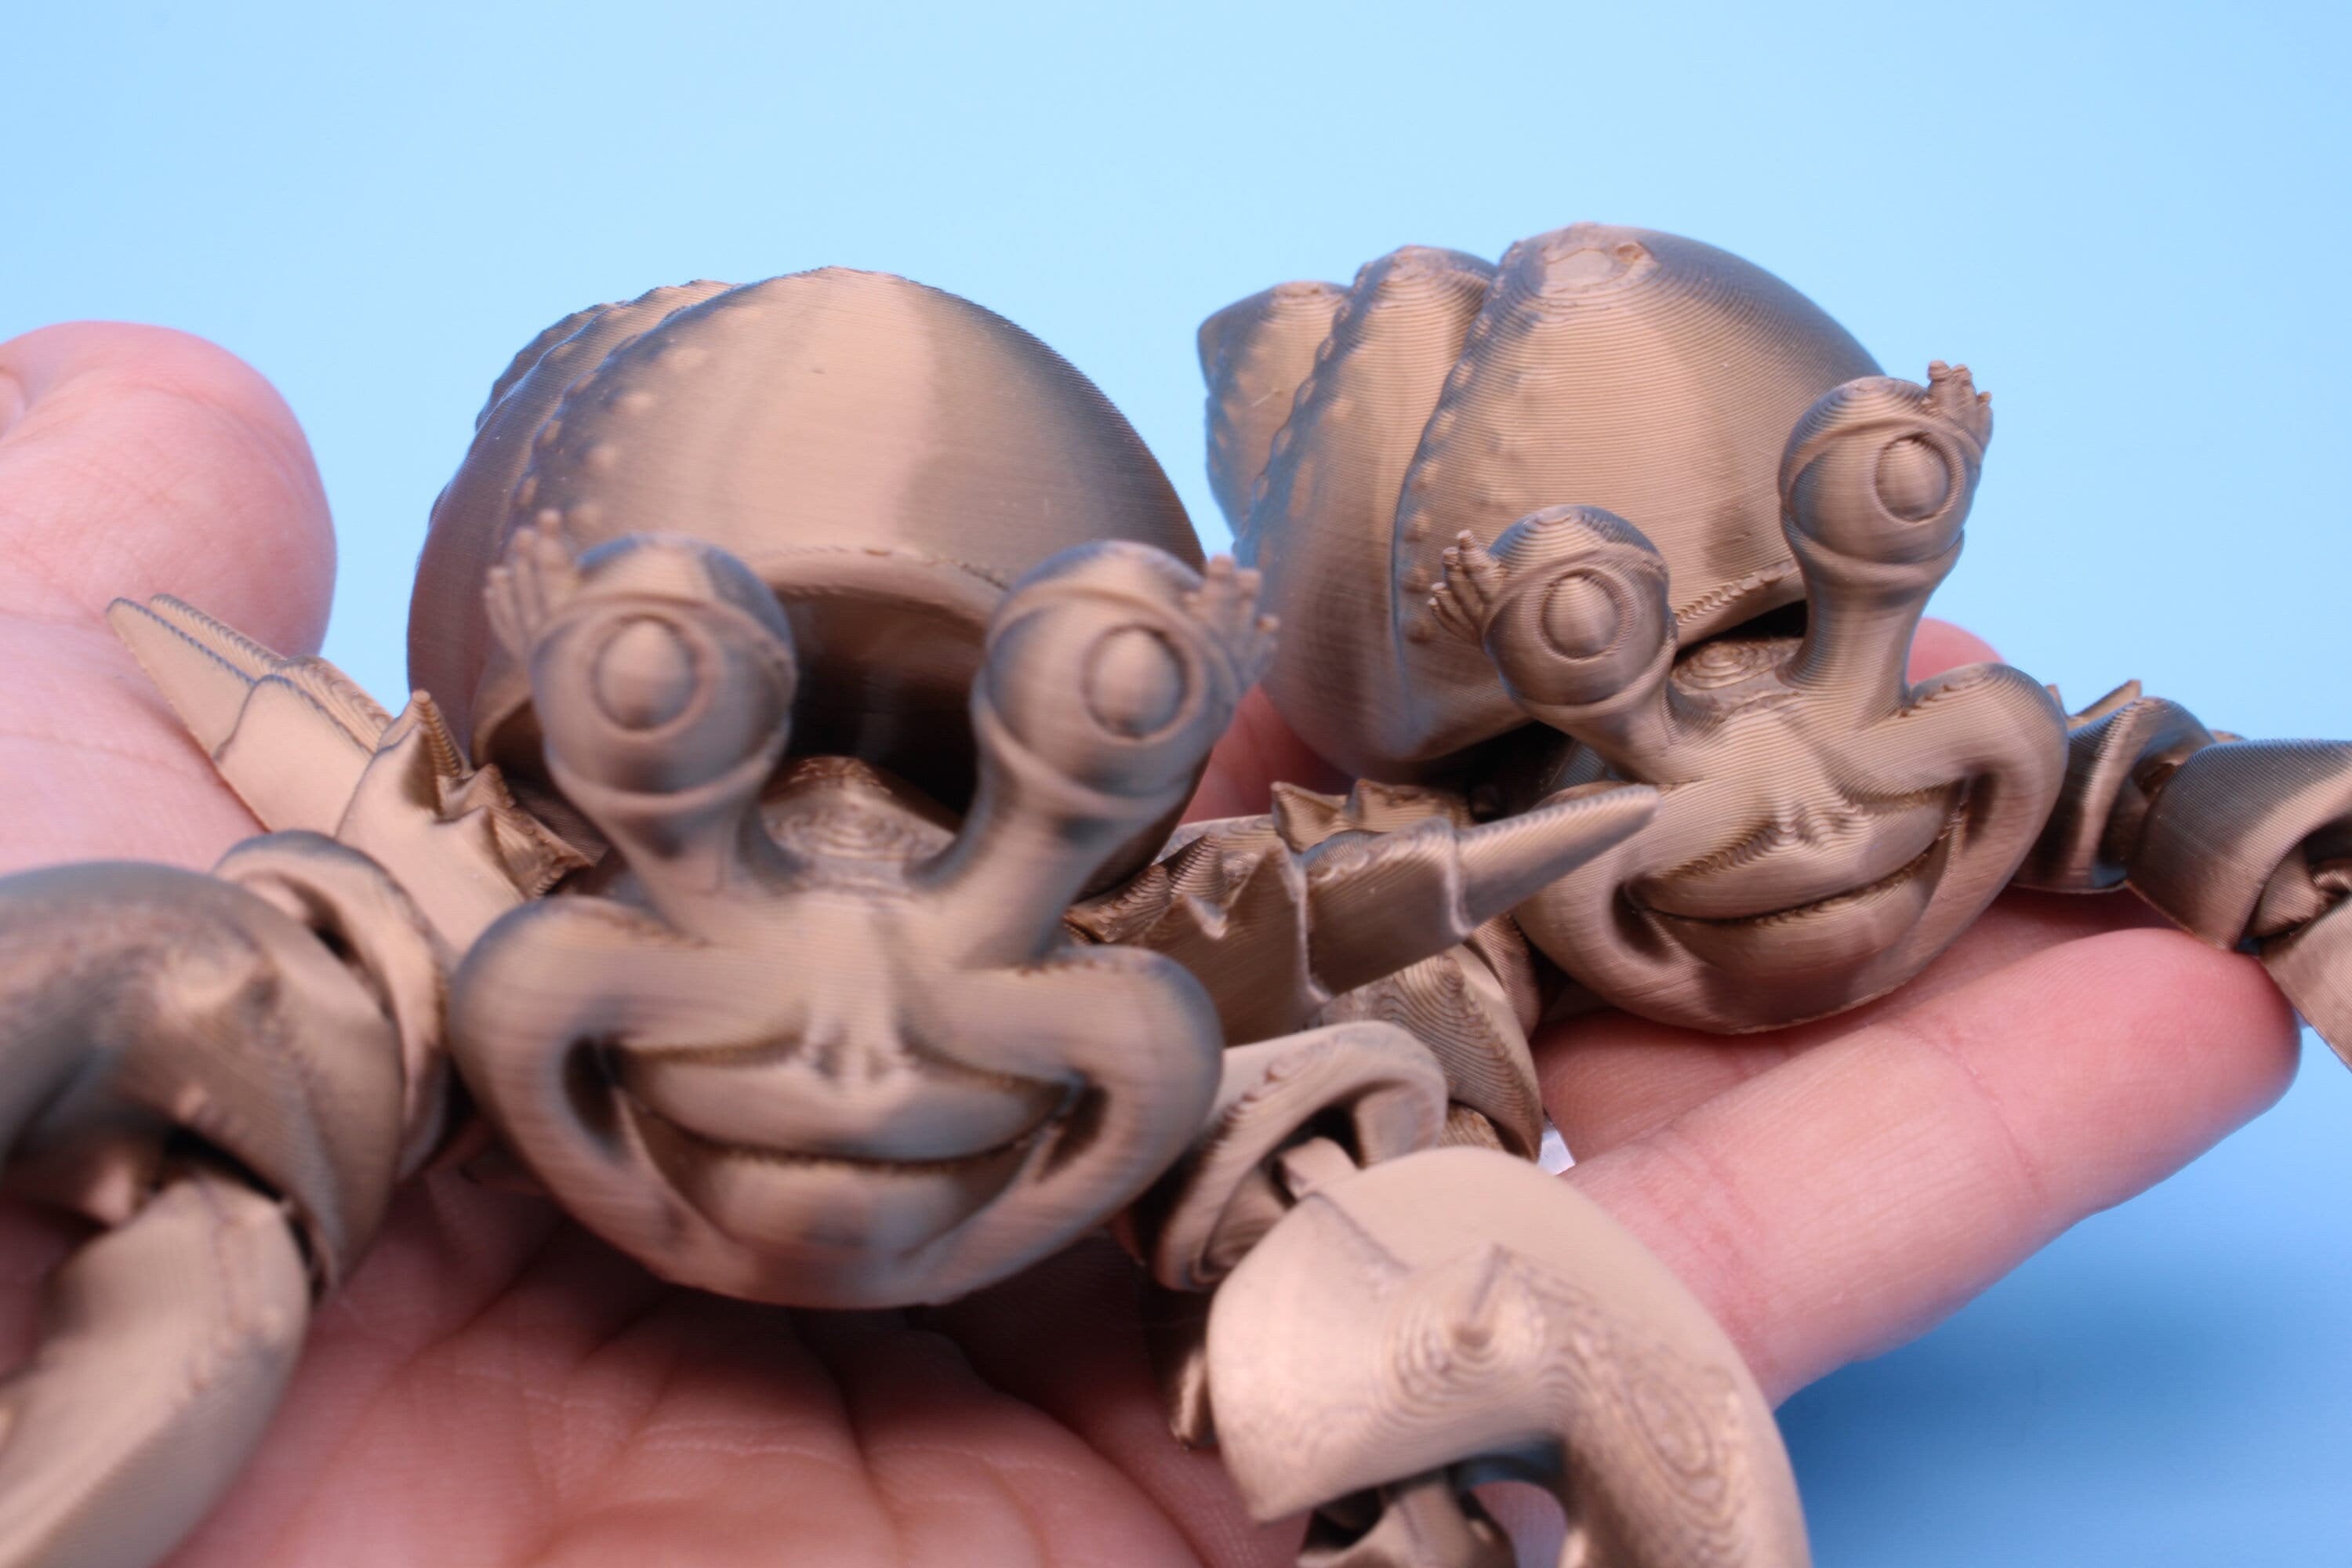 Flexi Hermit Crab Mr. & Mrs. | Articulating Coffee Gold | 3D Printed. | Super Cute | Friendly Crabs | Great Fidget Toy | Buddy | Sensory.